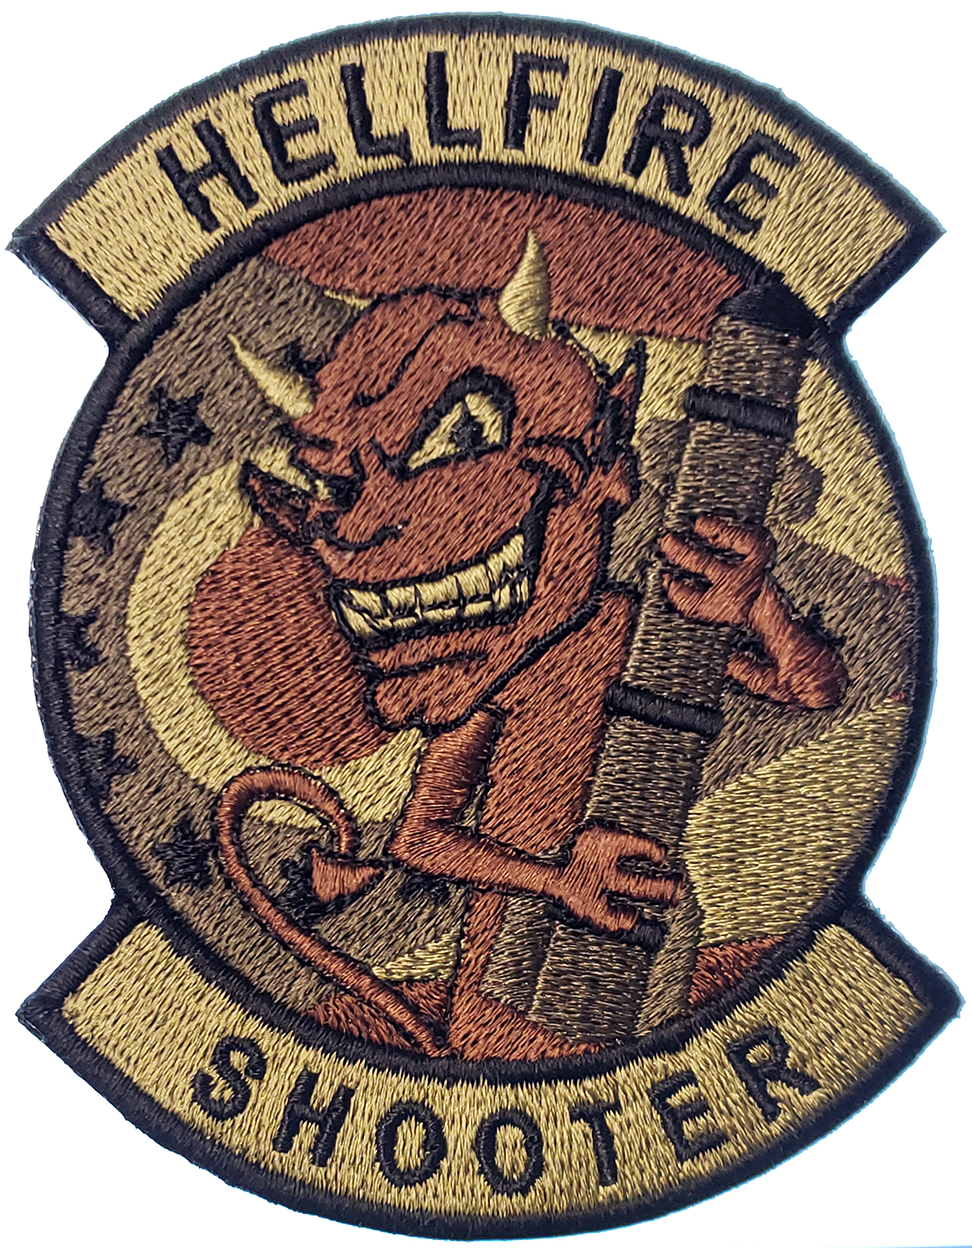 OHANG Hellfire Shooter OCP